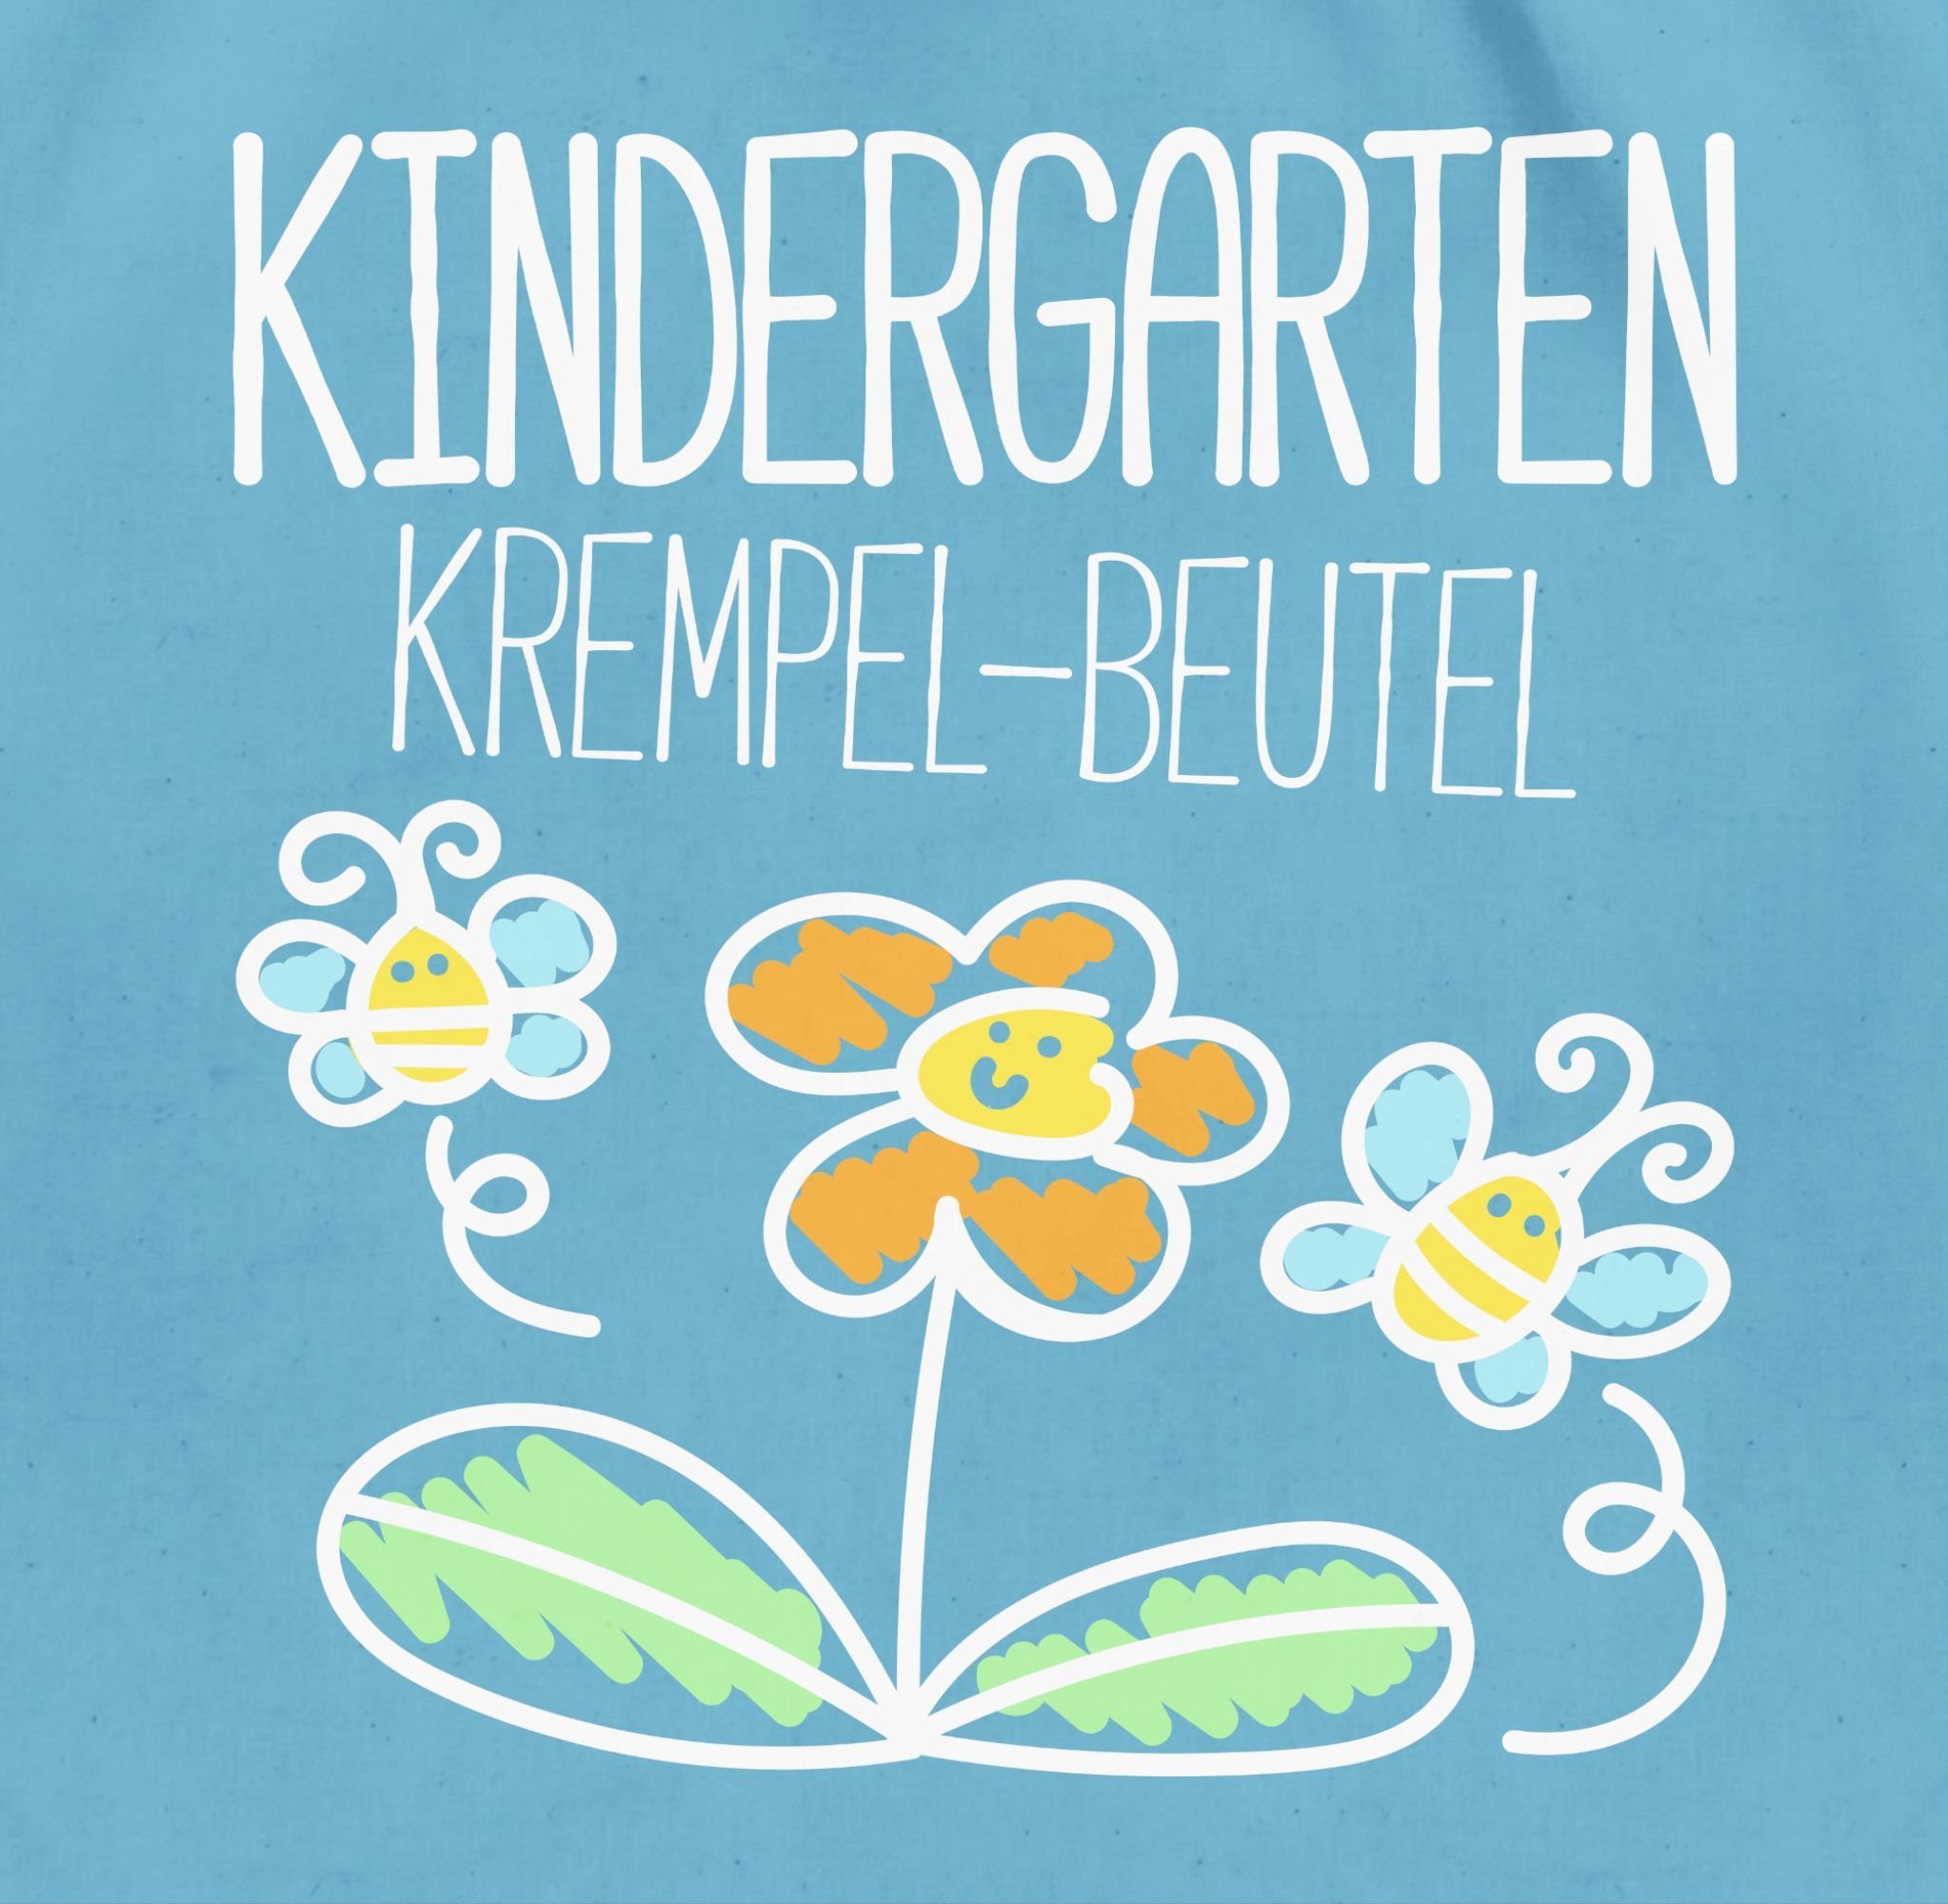 Shirtracer Turnbeutel Hellblau Krempel-Beutel, bedruckt Kindergarten Turnbeutel 02